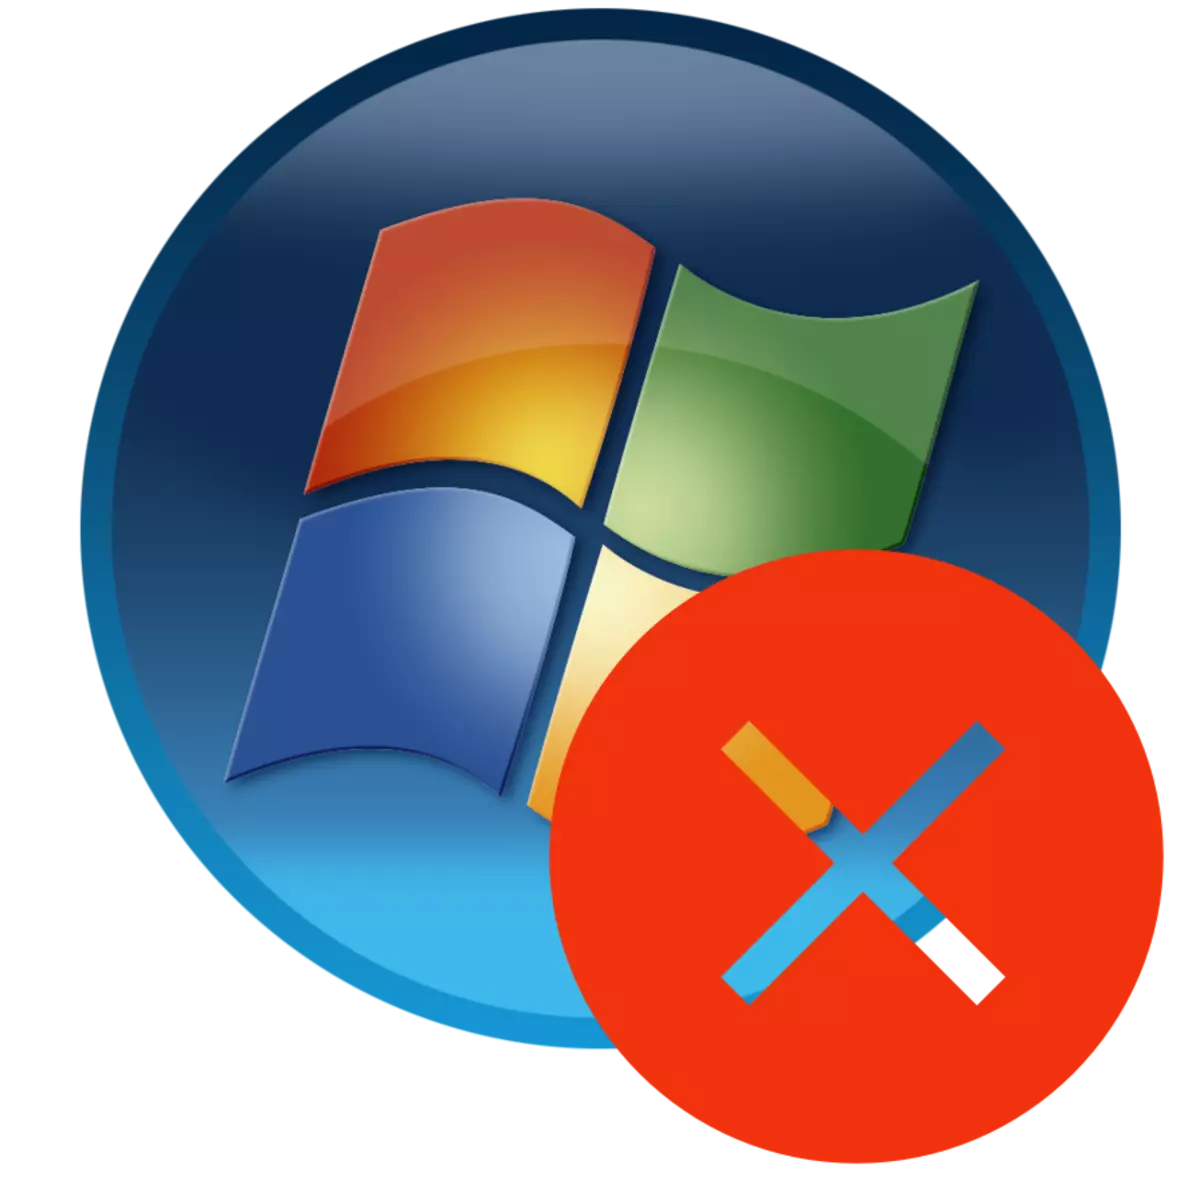 Lỗi 0x80070570 trong Windows 7